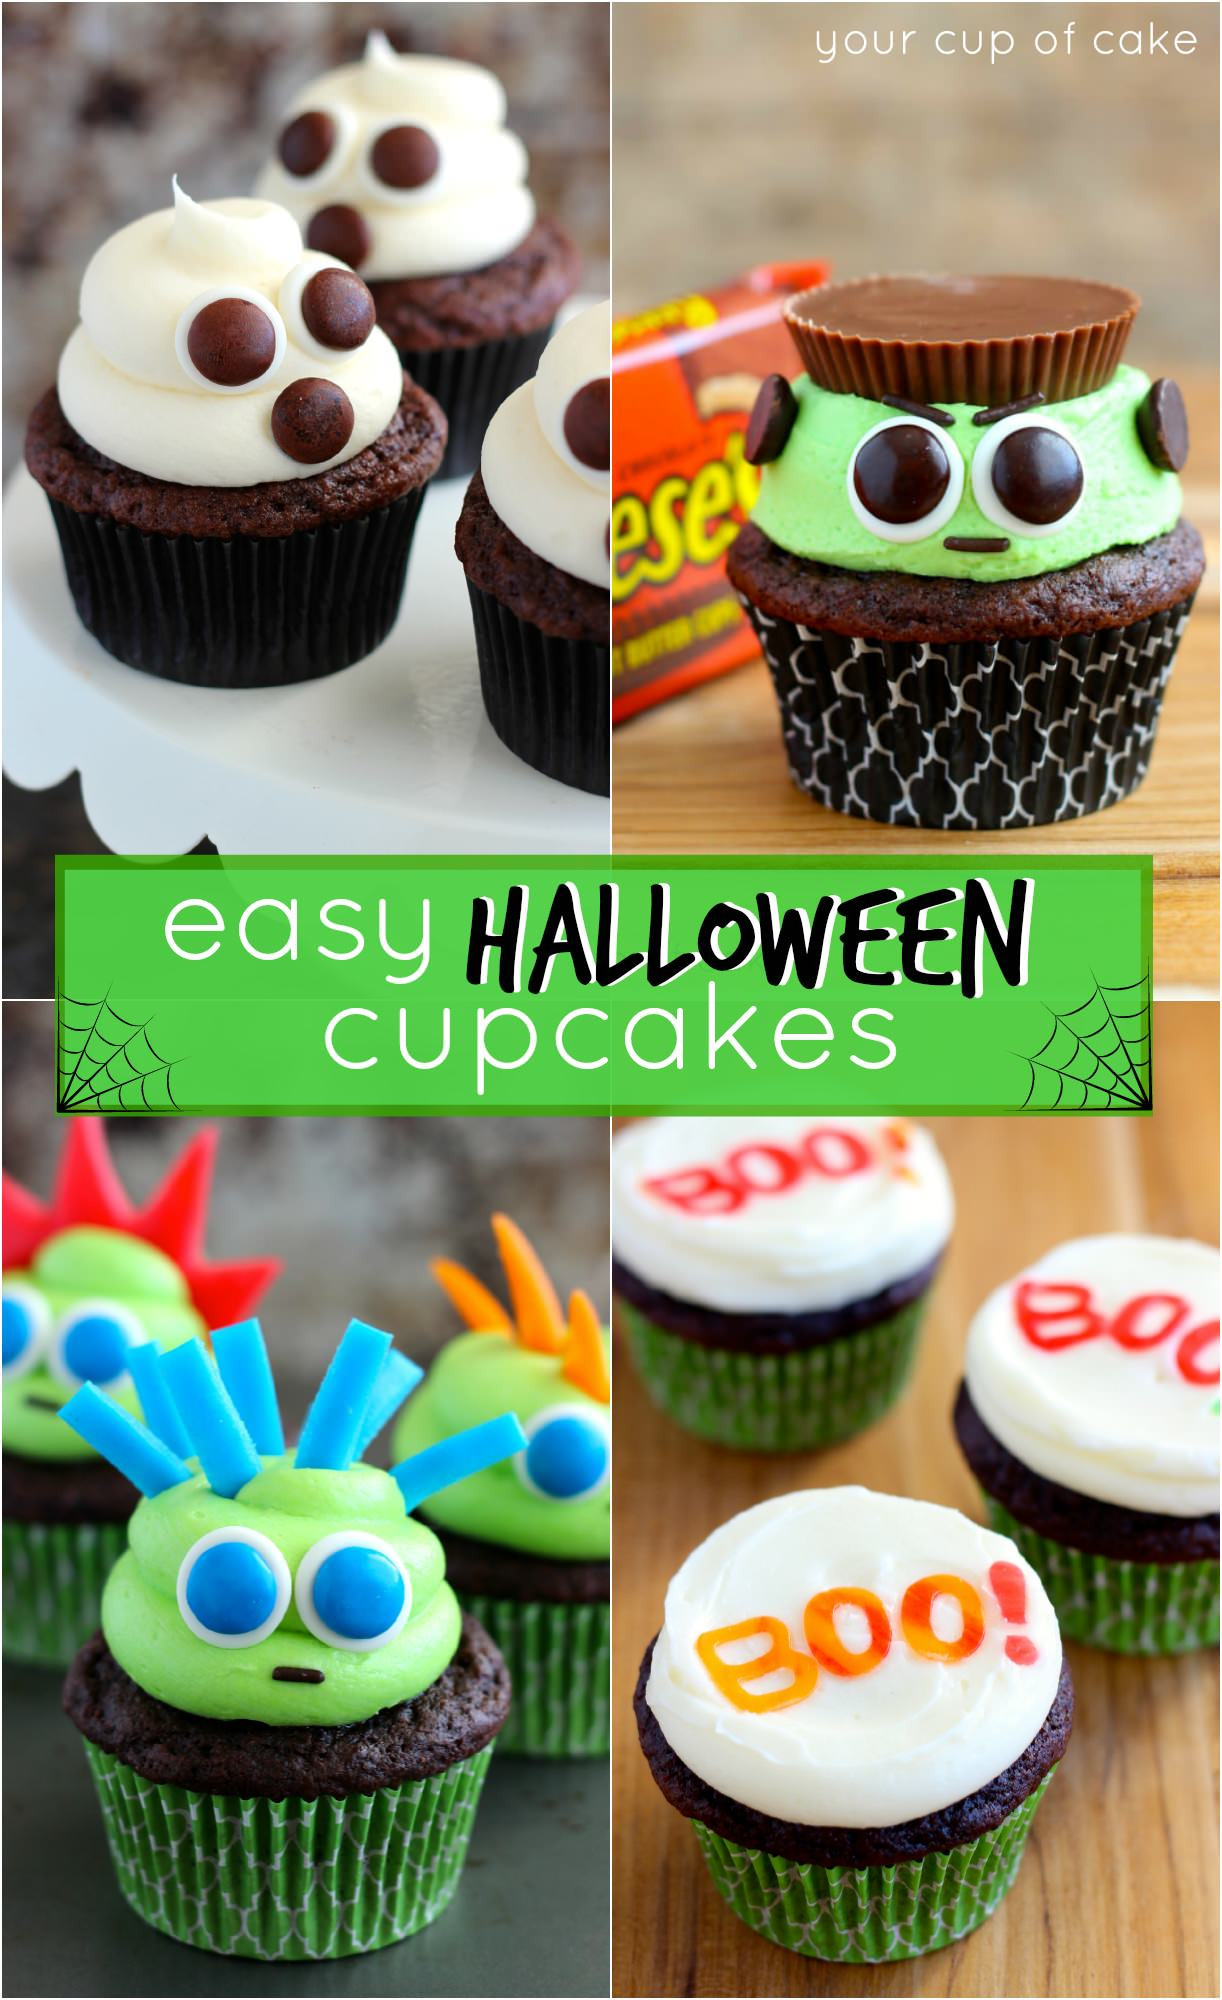 Homemade Halloween Cupcakes
 Easy Halloween Cupcake Ideas Your Cup of Cake